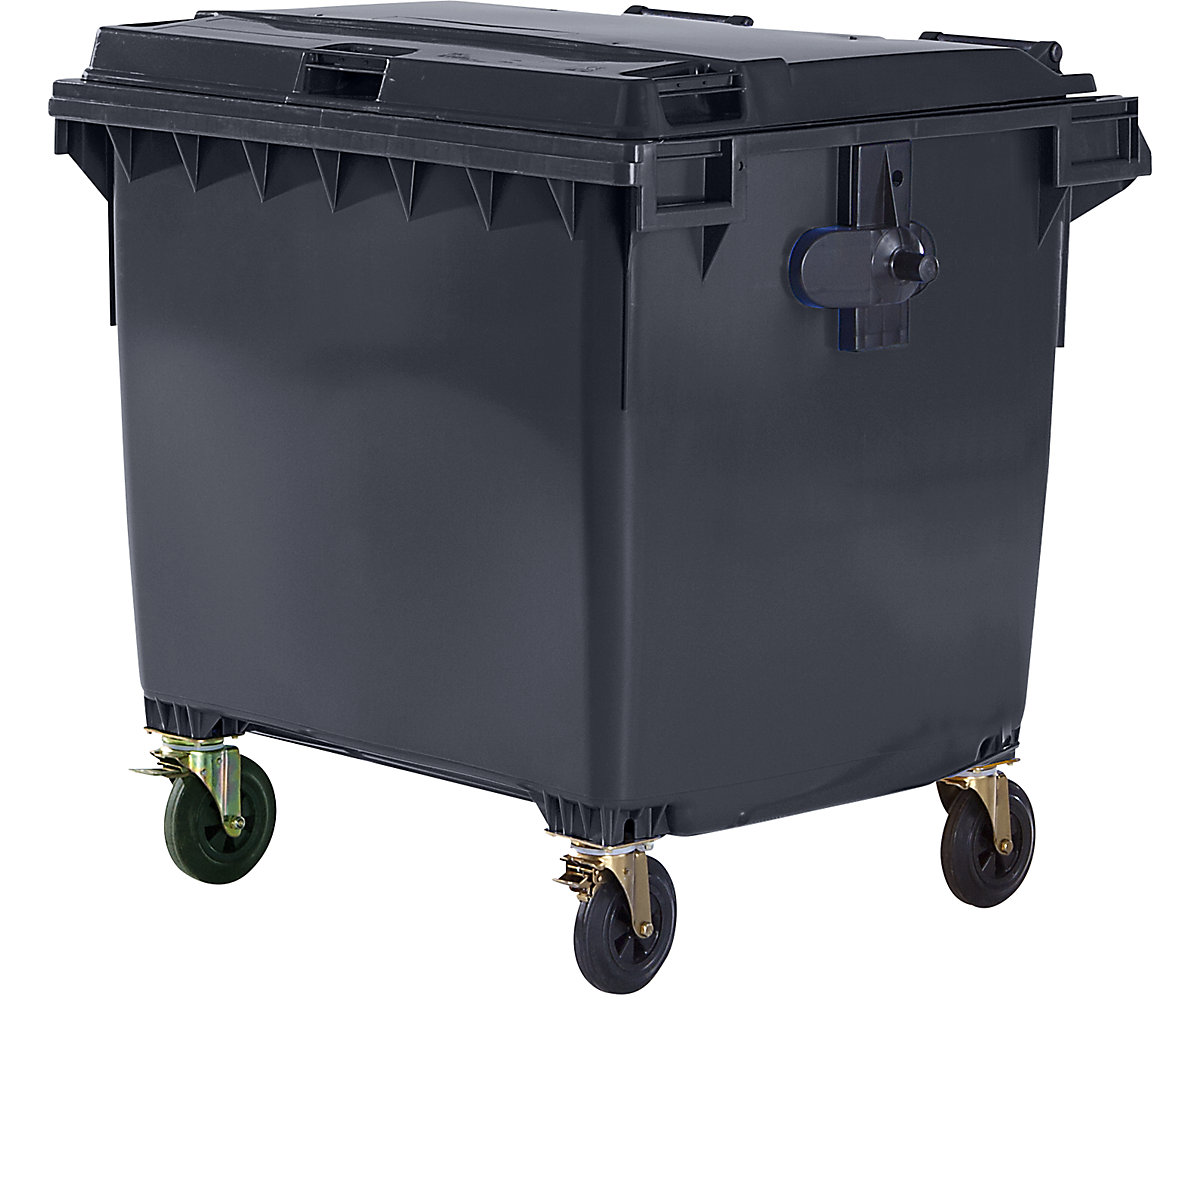 Container per rifiuti in plastica, DIN EN 840, capacità 1100 l, largh. x alt. x prof. 1370 x 1470 x 1115 mm, antracite-2